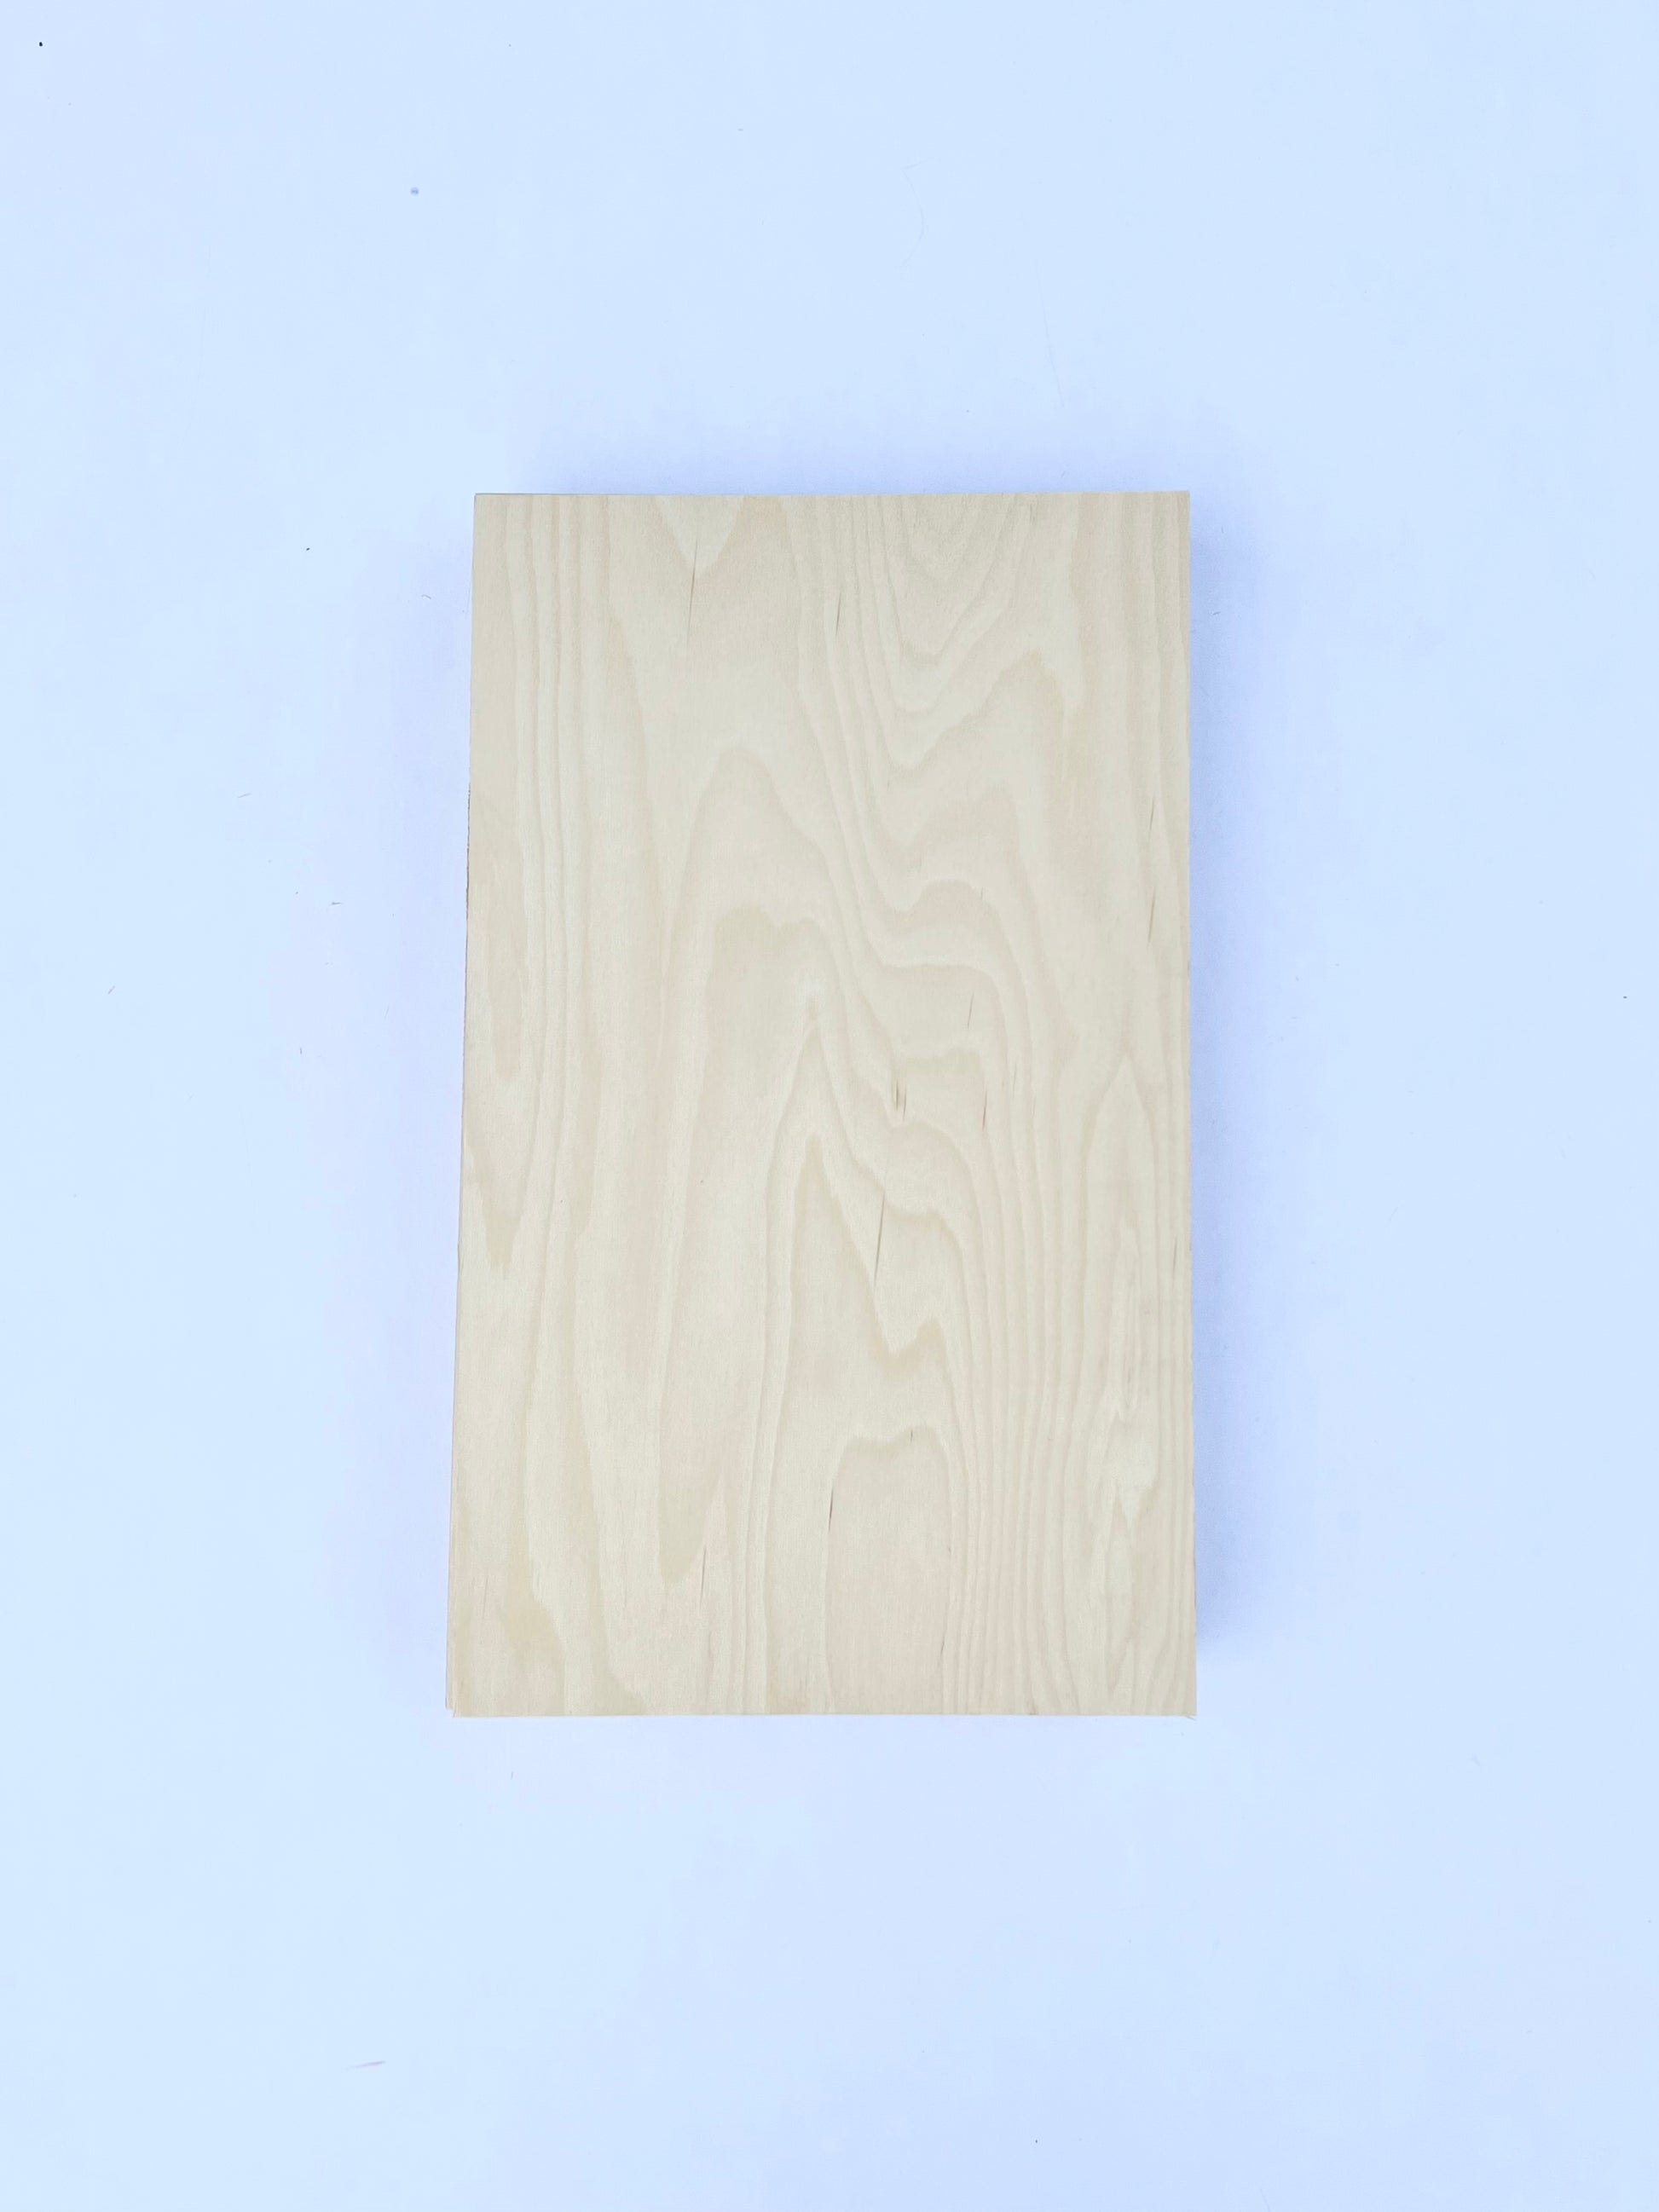 baltic birch plywood texture